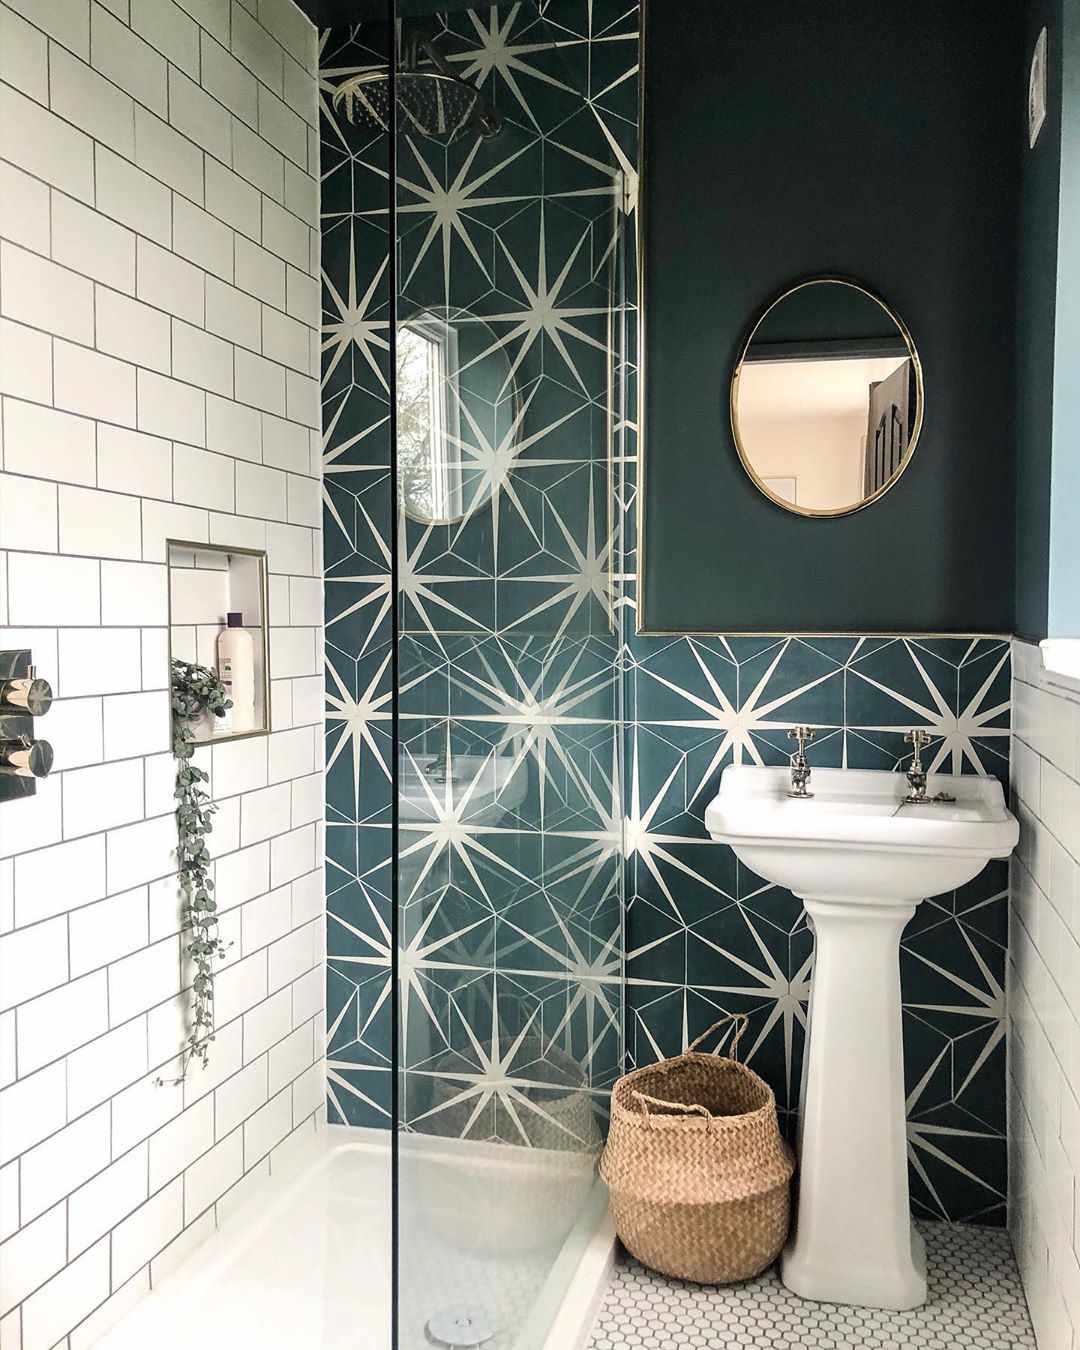 Salle de bain avec mur vert étoilé